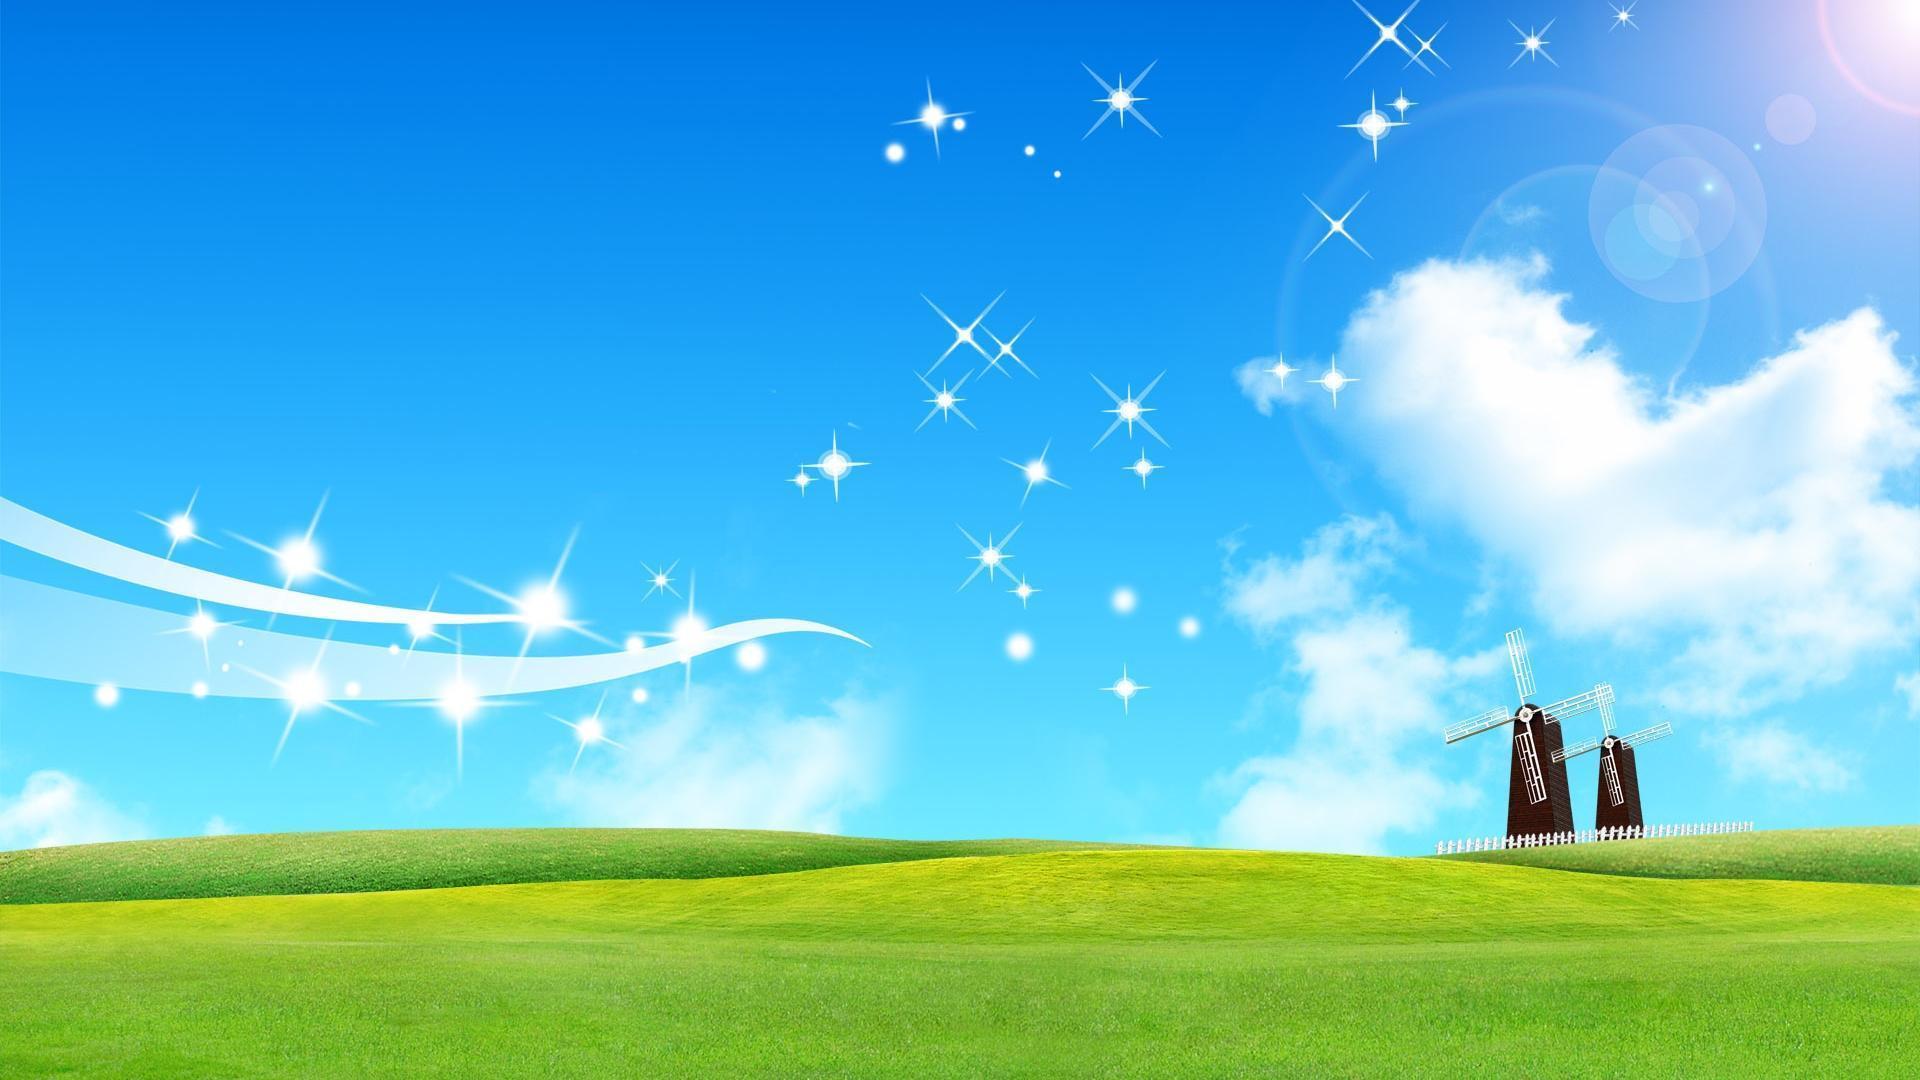 Hd Beautiful Cartoon Blue Sky And Grassland Background Widescreen